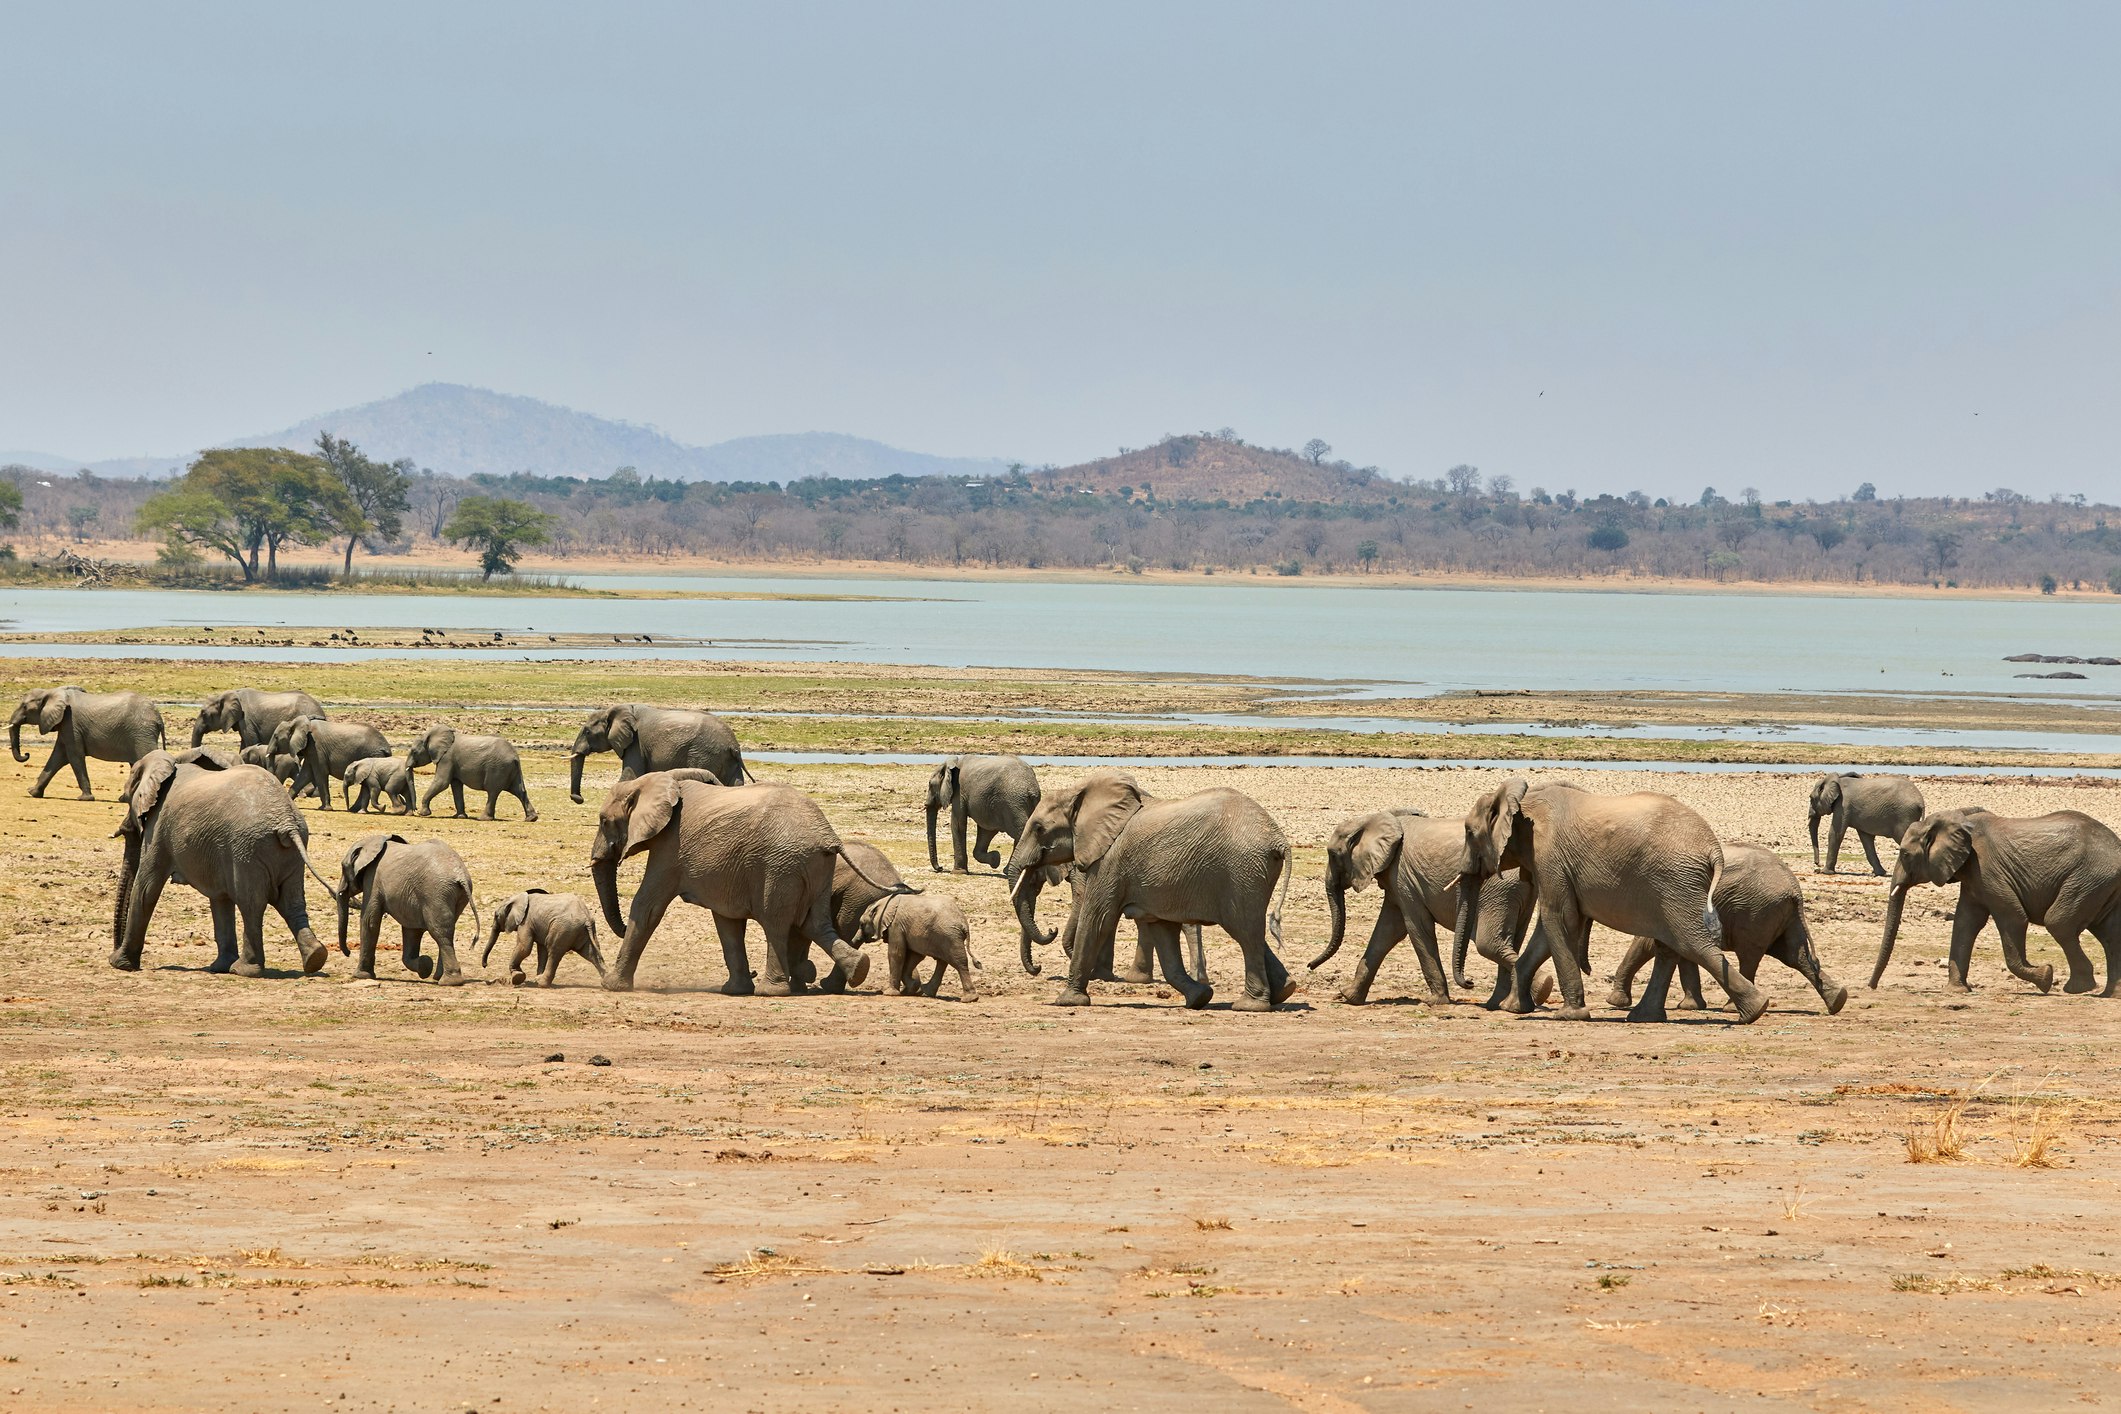 A herd of African elephants walk across a flat dusty landscape on the edge of a lake